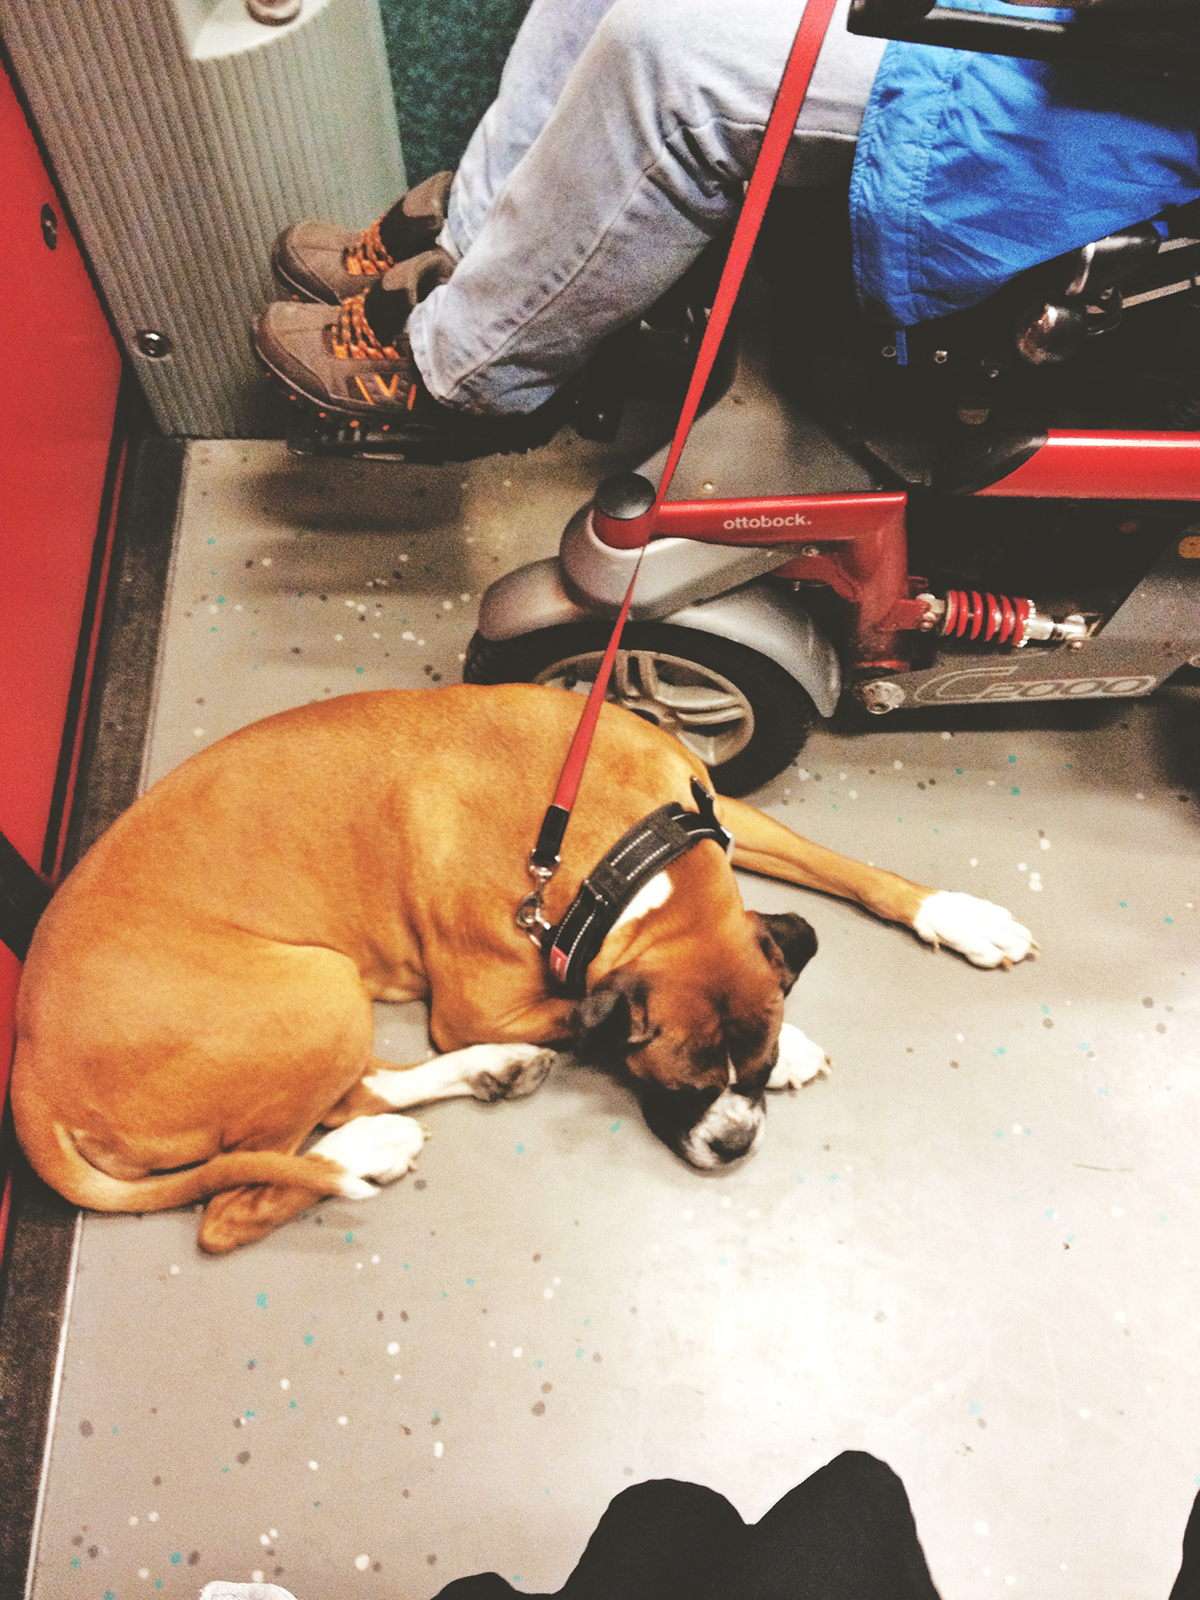 dogs dog BVG berlin subway tram bus iphone